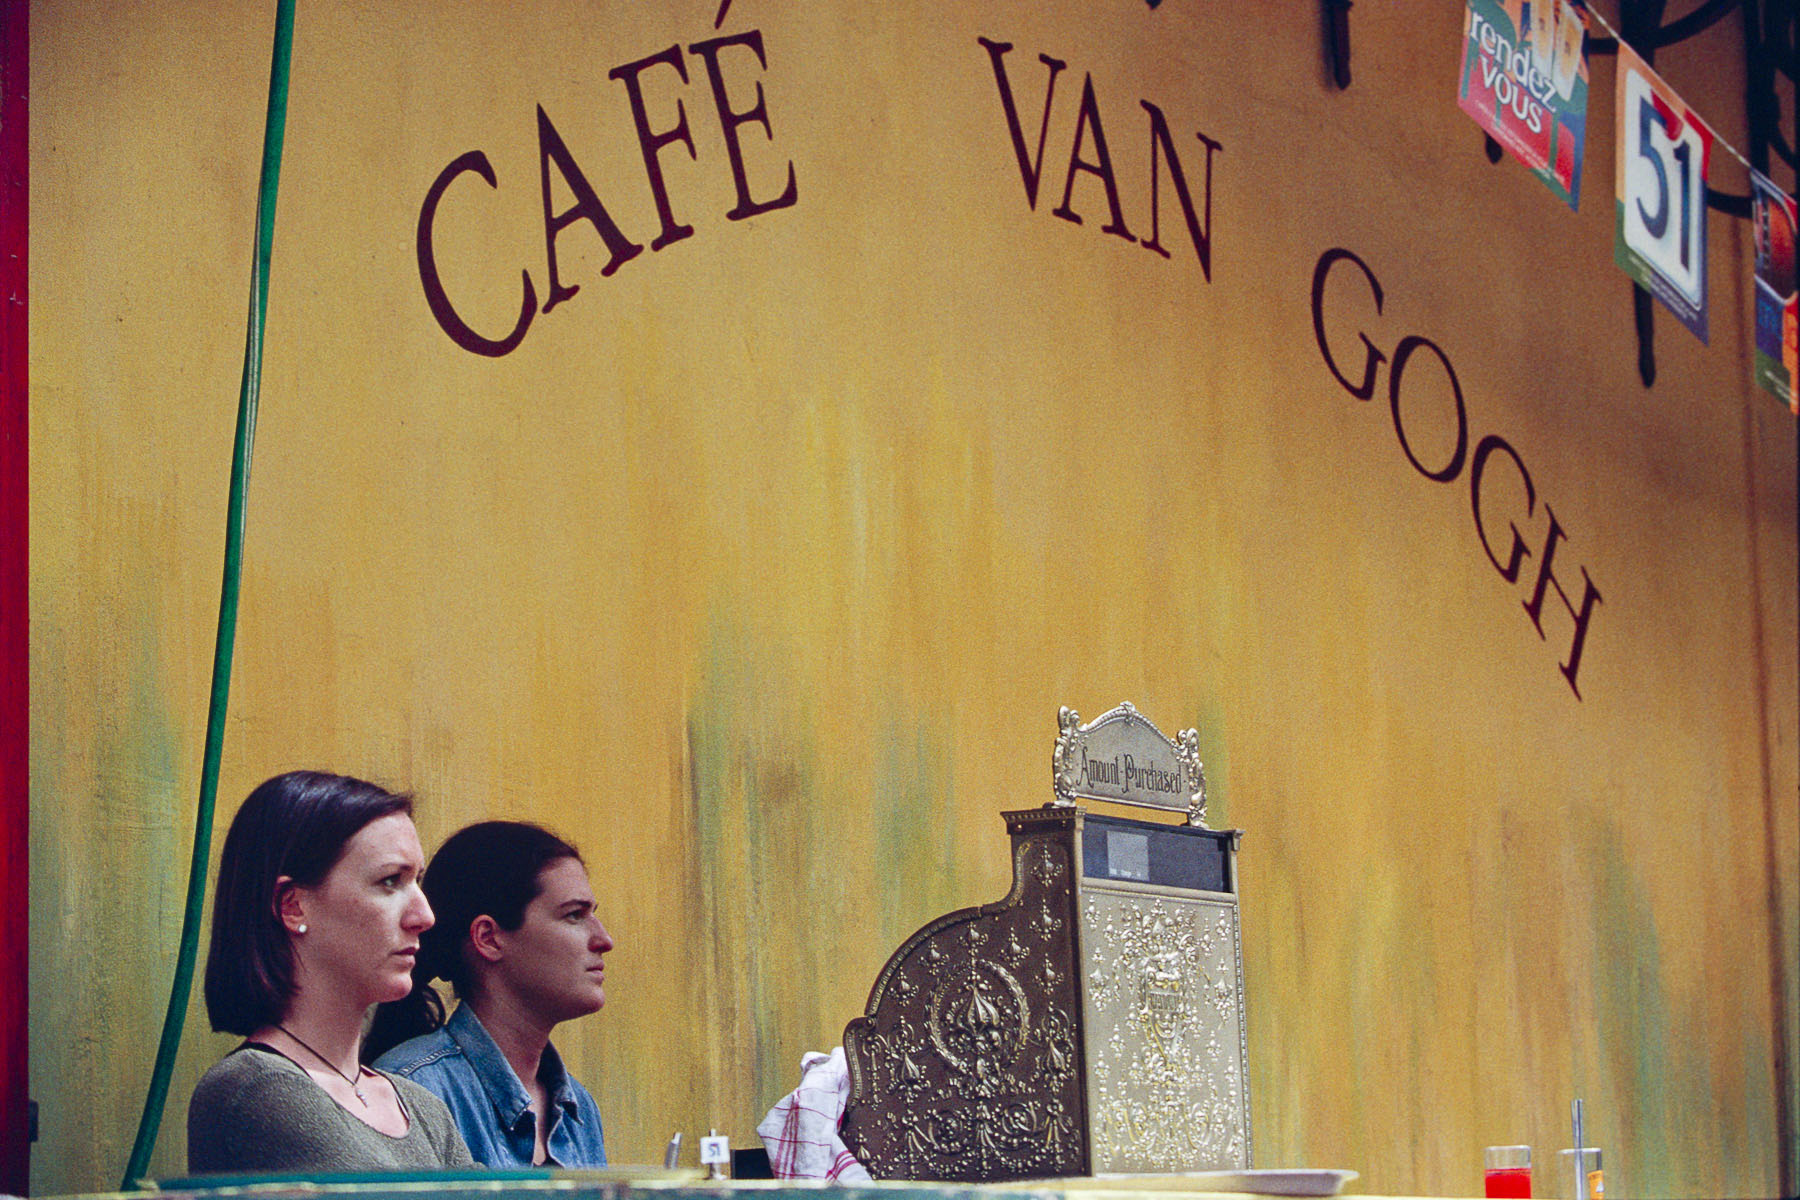 Arles. Van Gogh Café on Forum Square. 2000